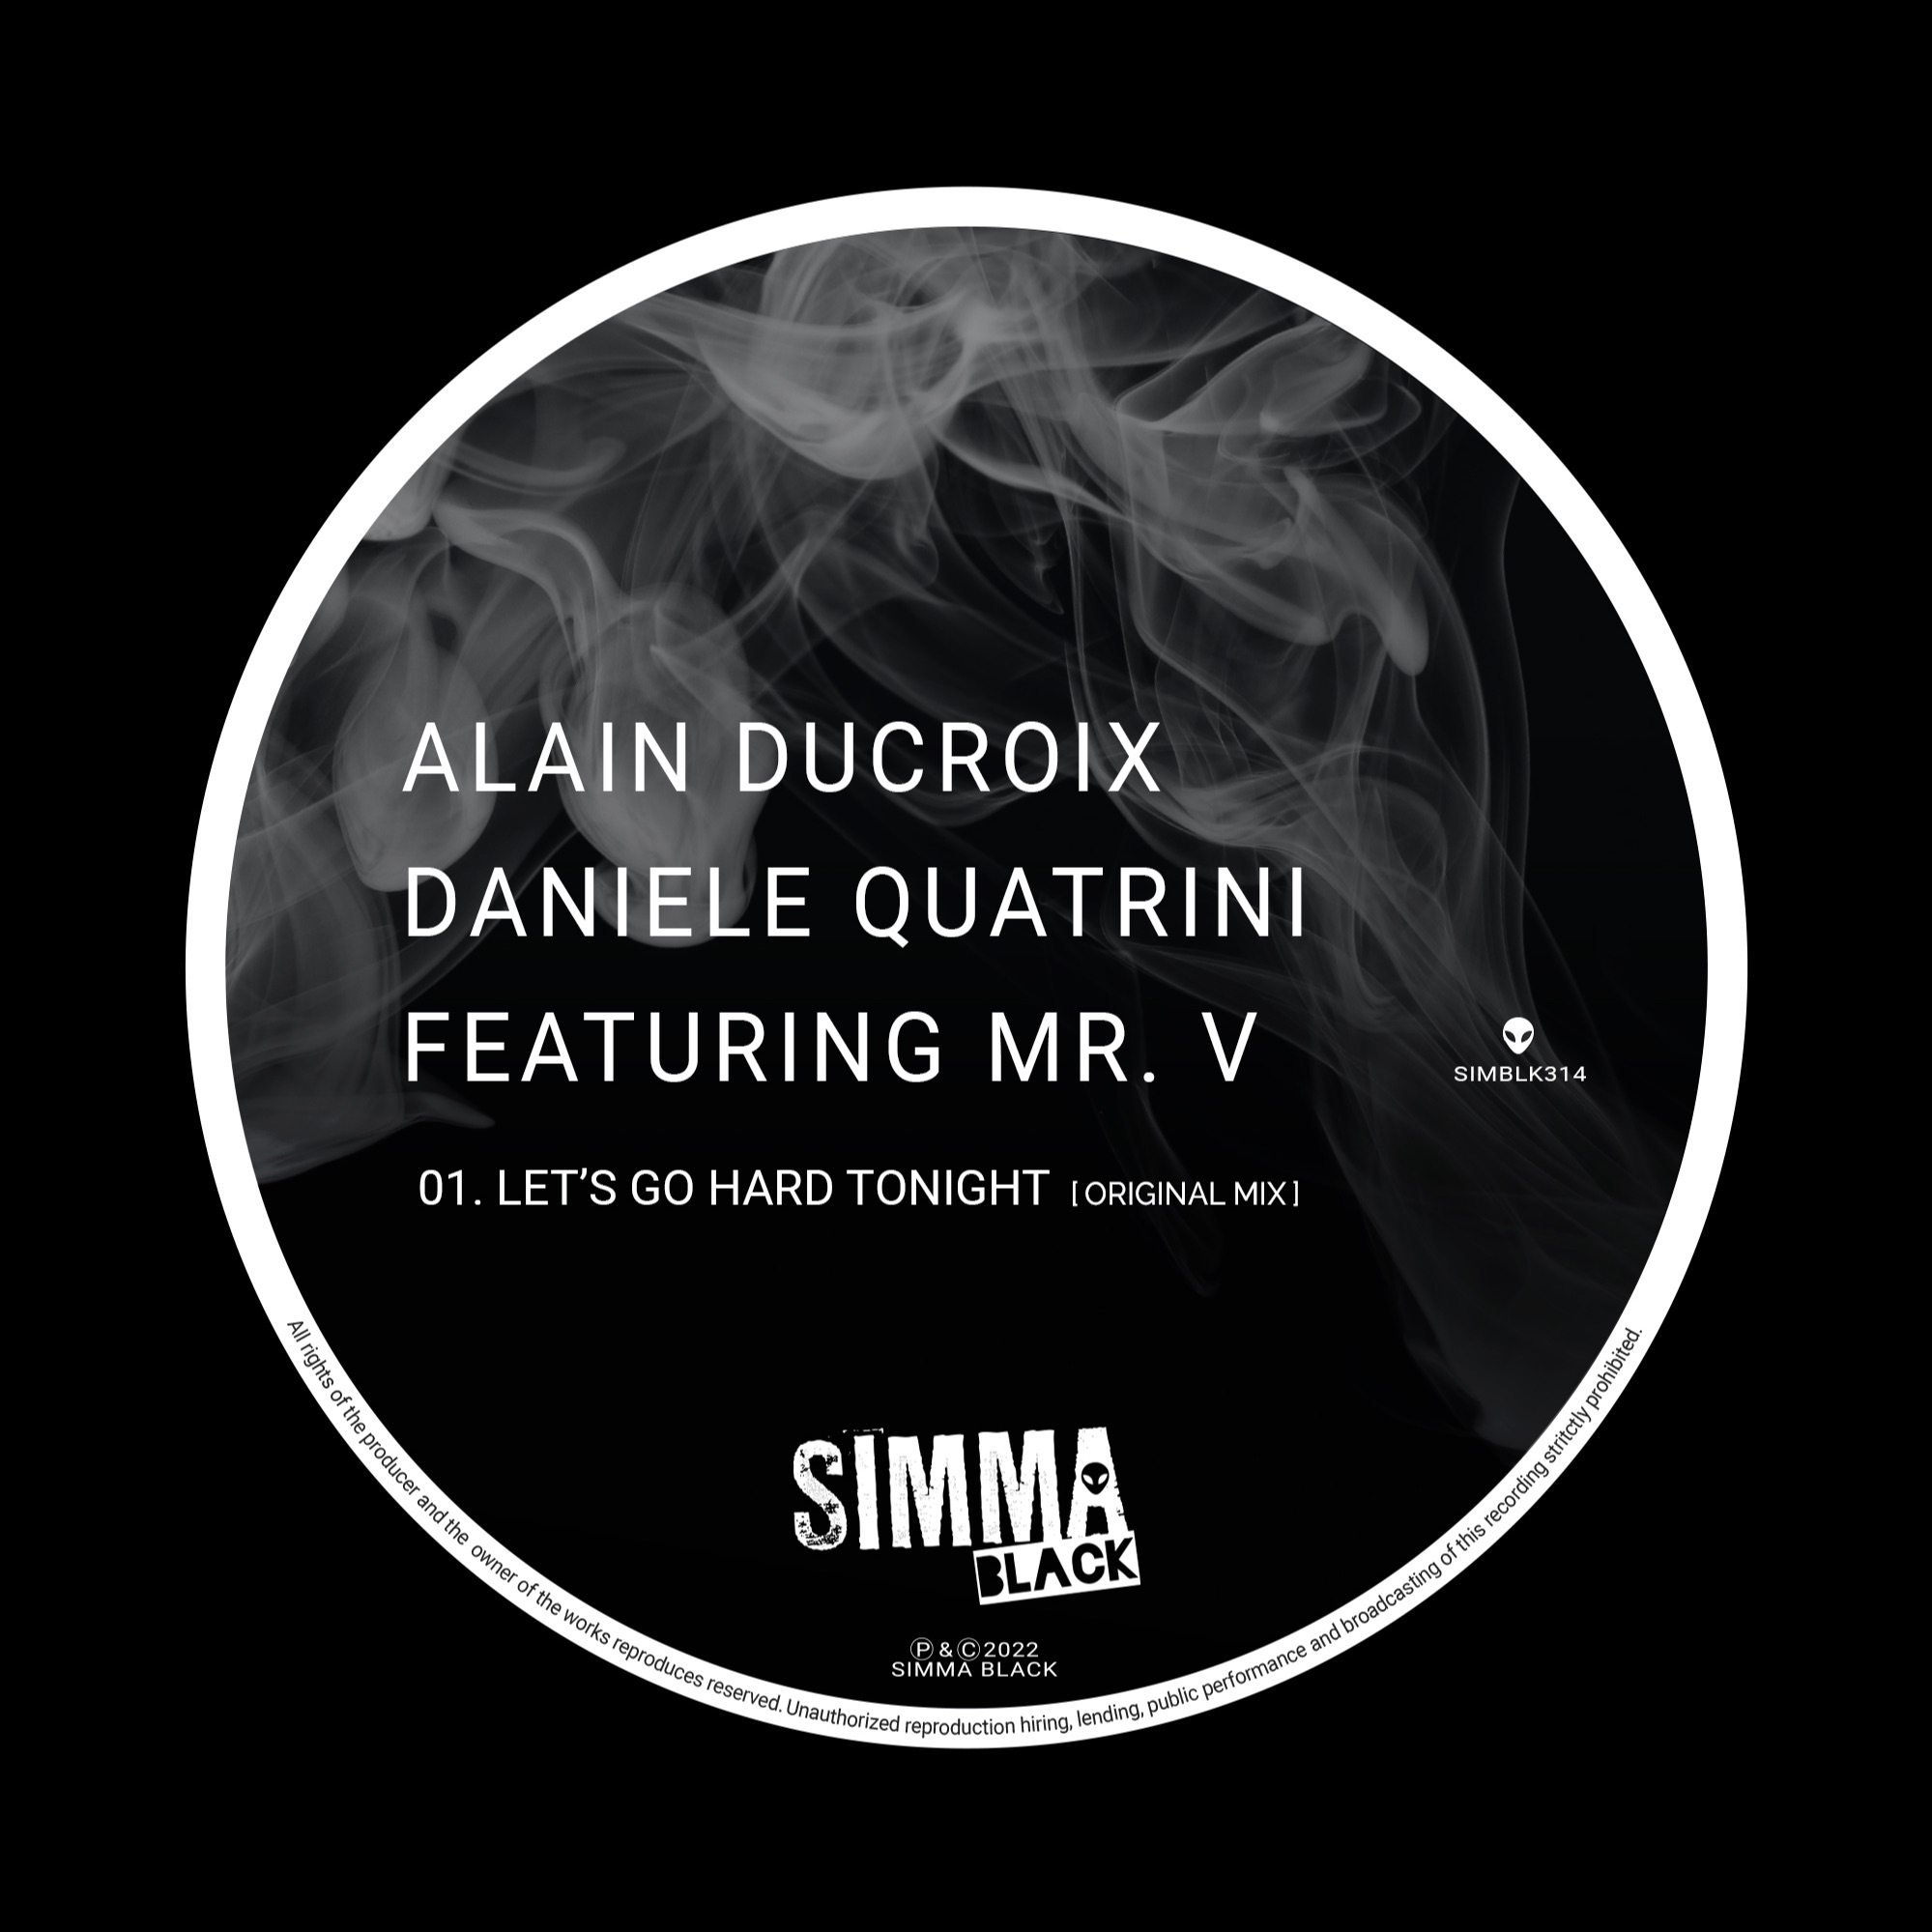 Preuzimanje datoteka SIMBLK314 | Alain Ducroix, Daniele Quatrini Featuring Mr. V - Let's Go Hard Tonight (Original Mix)